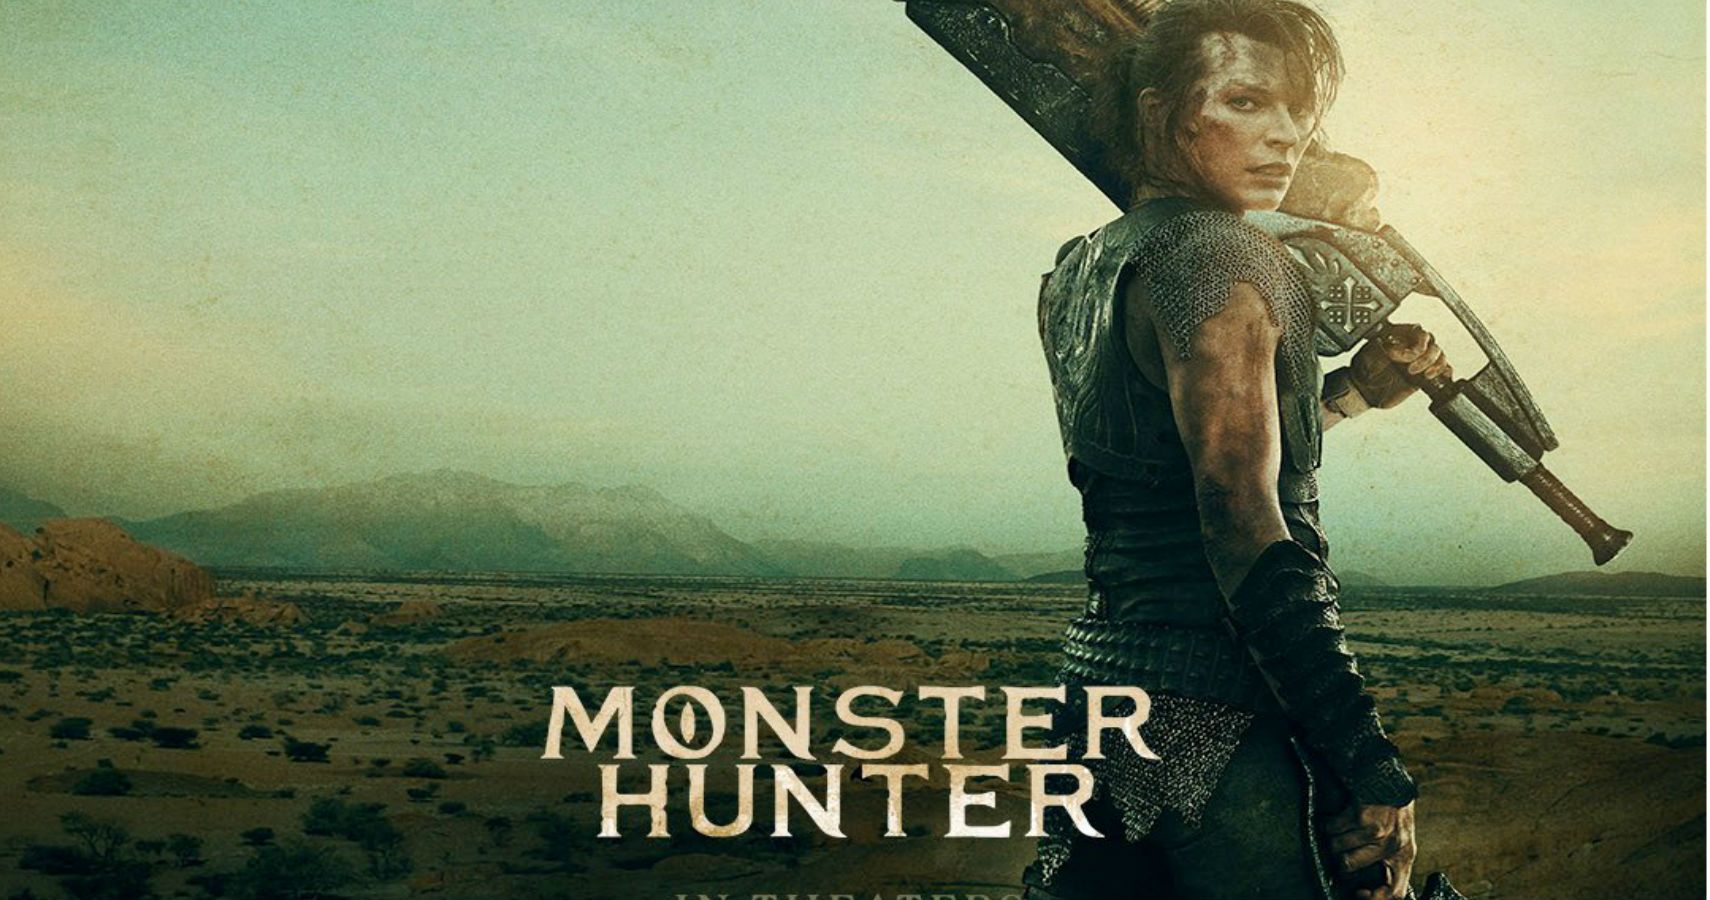 Image result for monster hunterhollywood movie poster